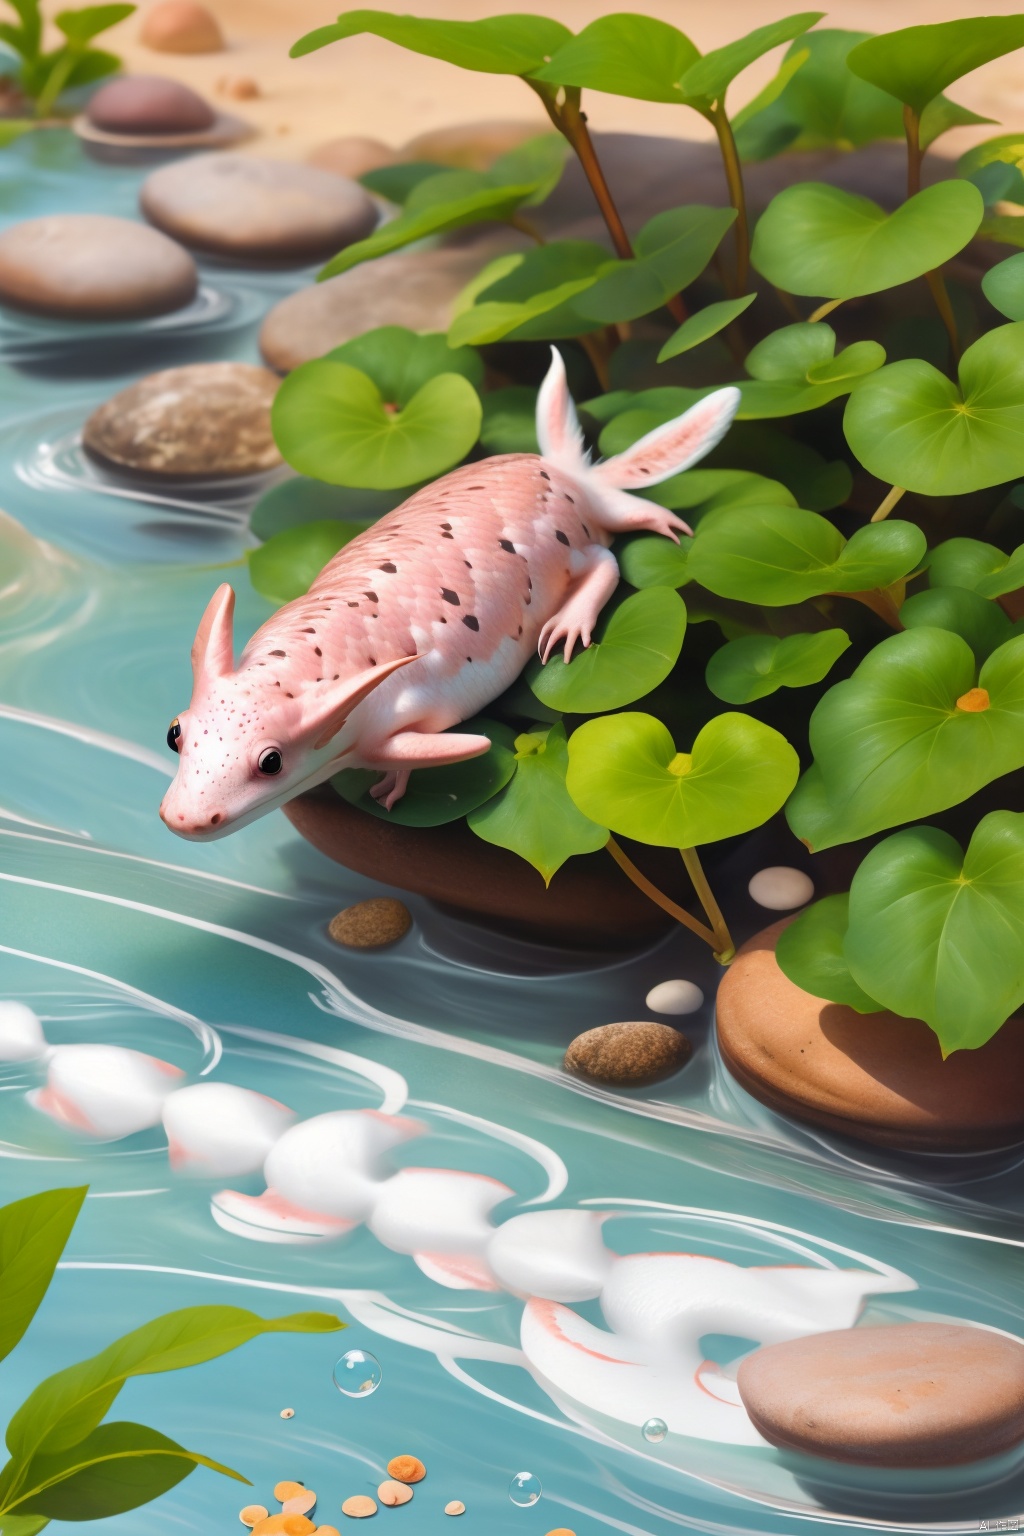 a cartoon drawn creature, 1creature, Axolotl, white creature, salamander, solo, smile, no humans, nature, plant, leaf, bubbles, river, pebble